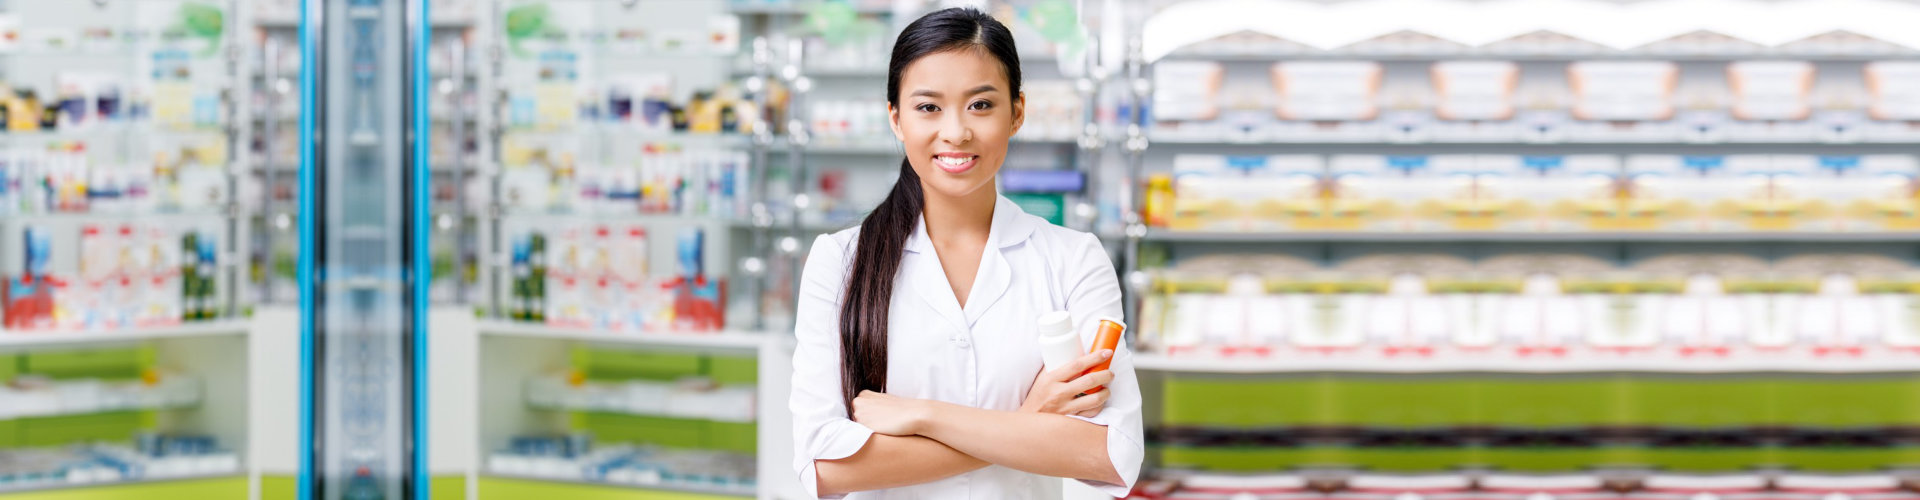 happy female pharmacist